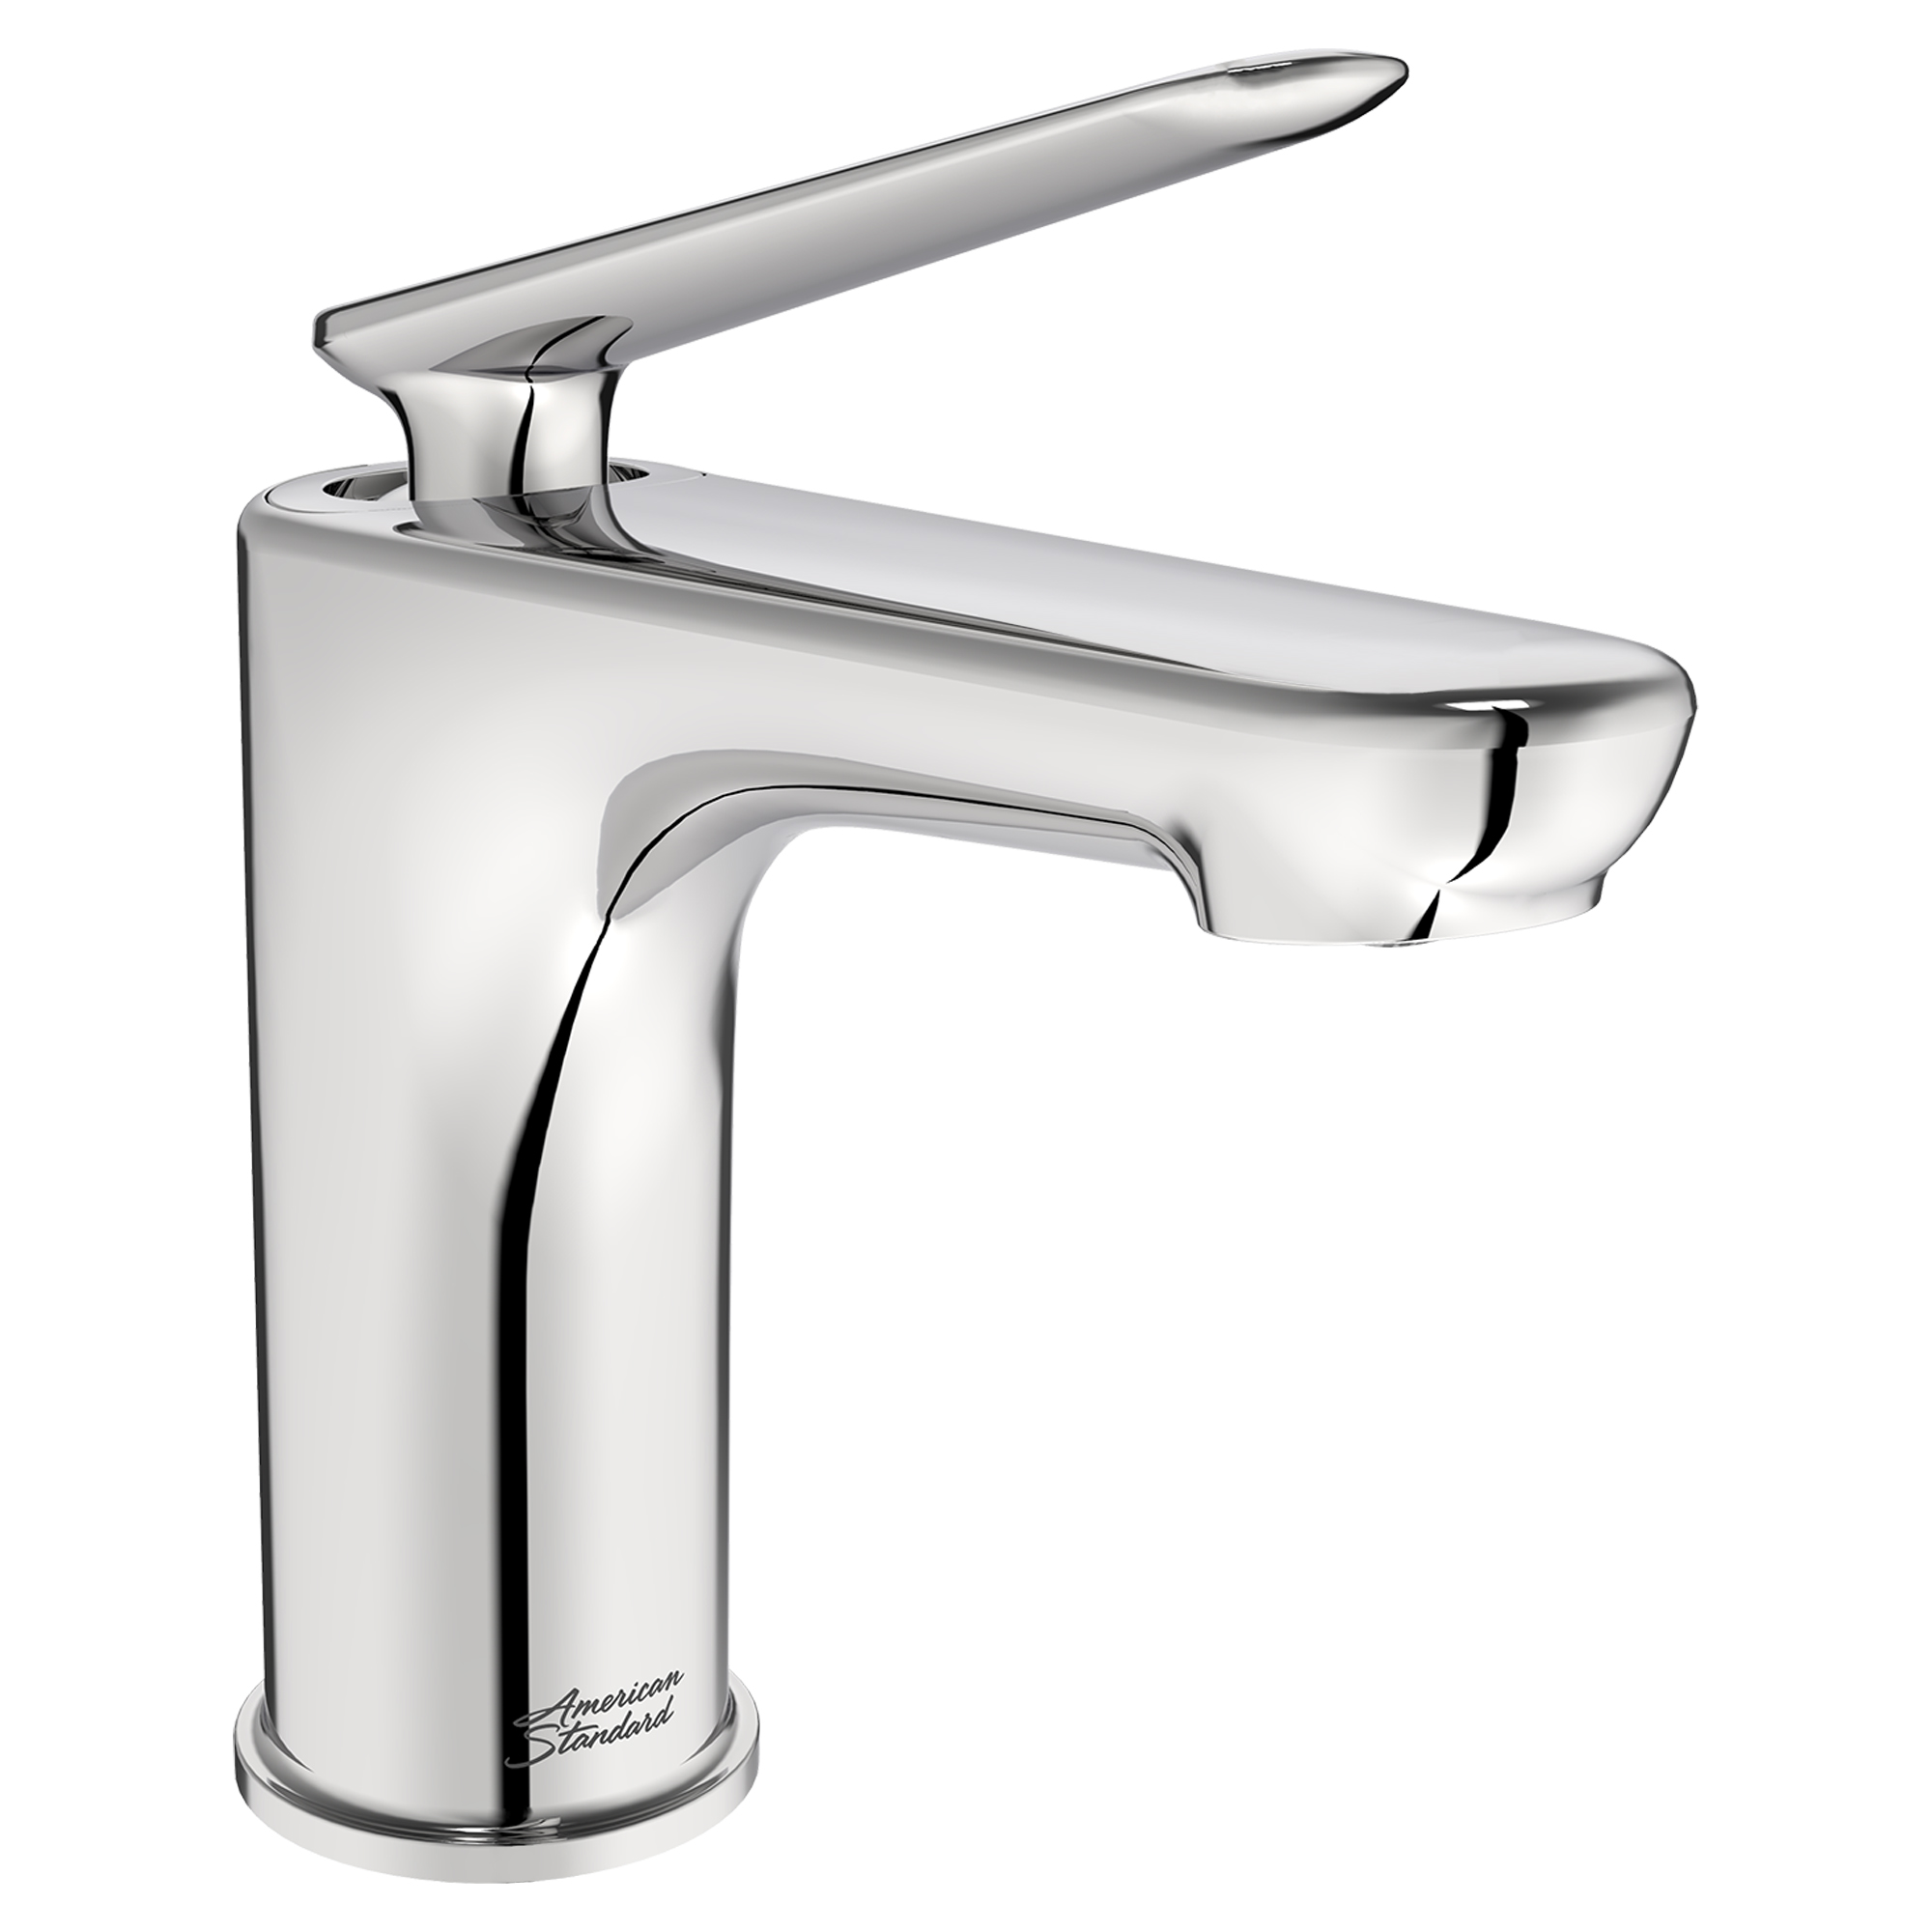 Studio™ S Single Hole Single-Handle Bathroom Faucet 1.2 gpm/ 4.5 L/min With Lever Handle